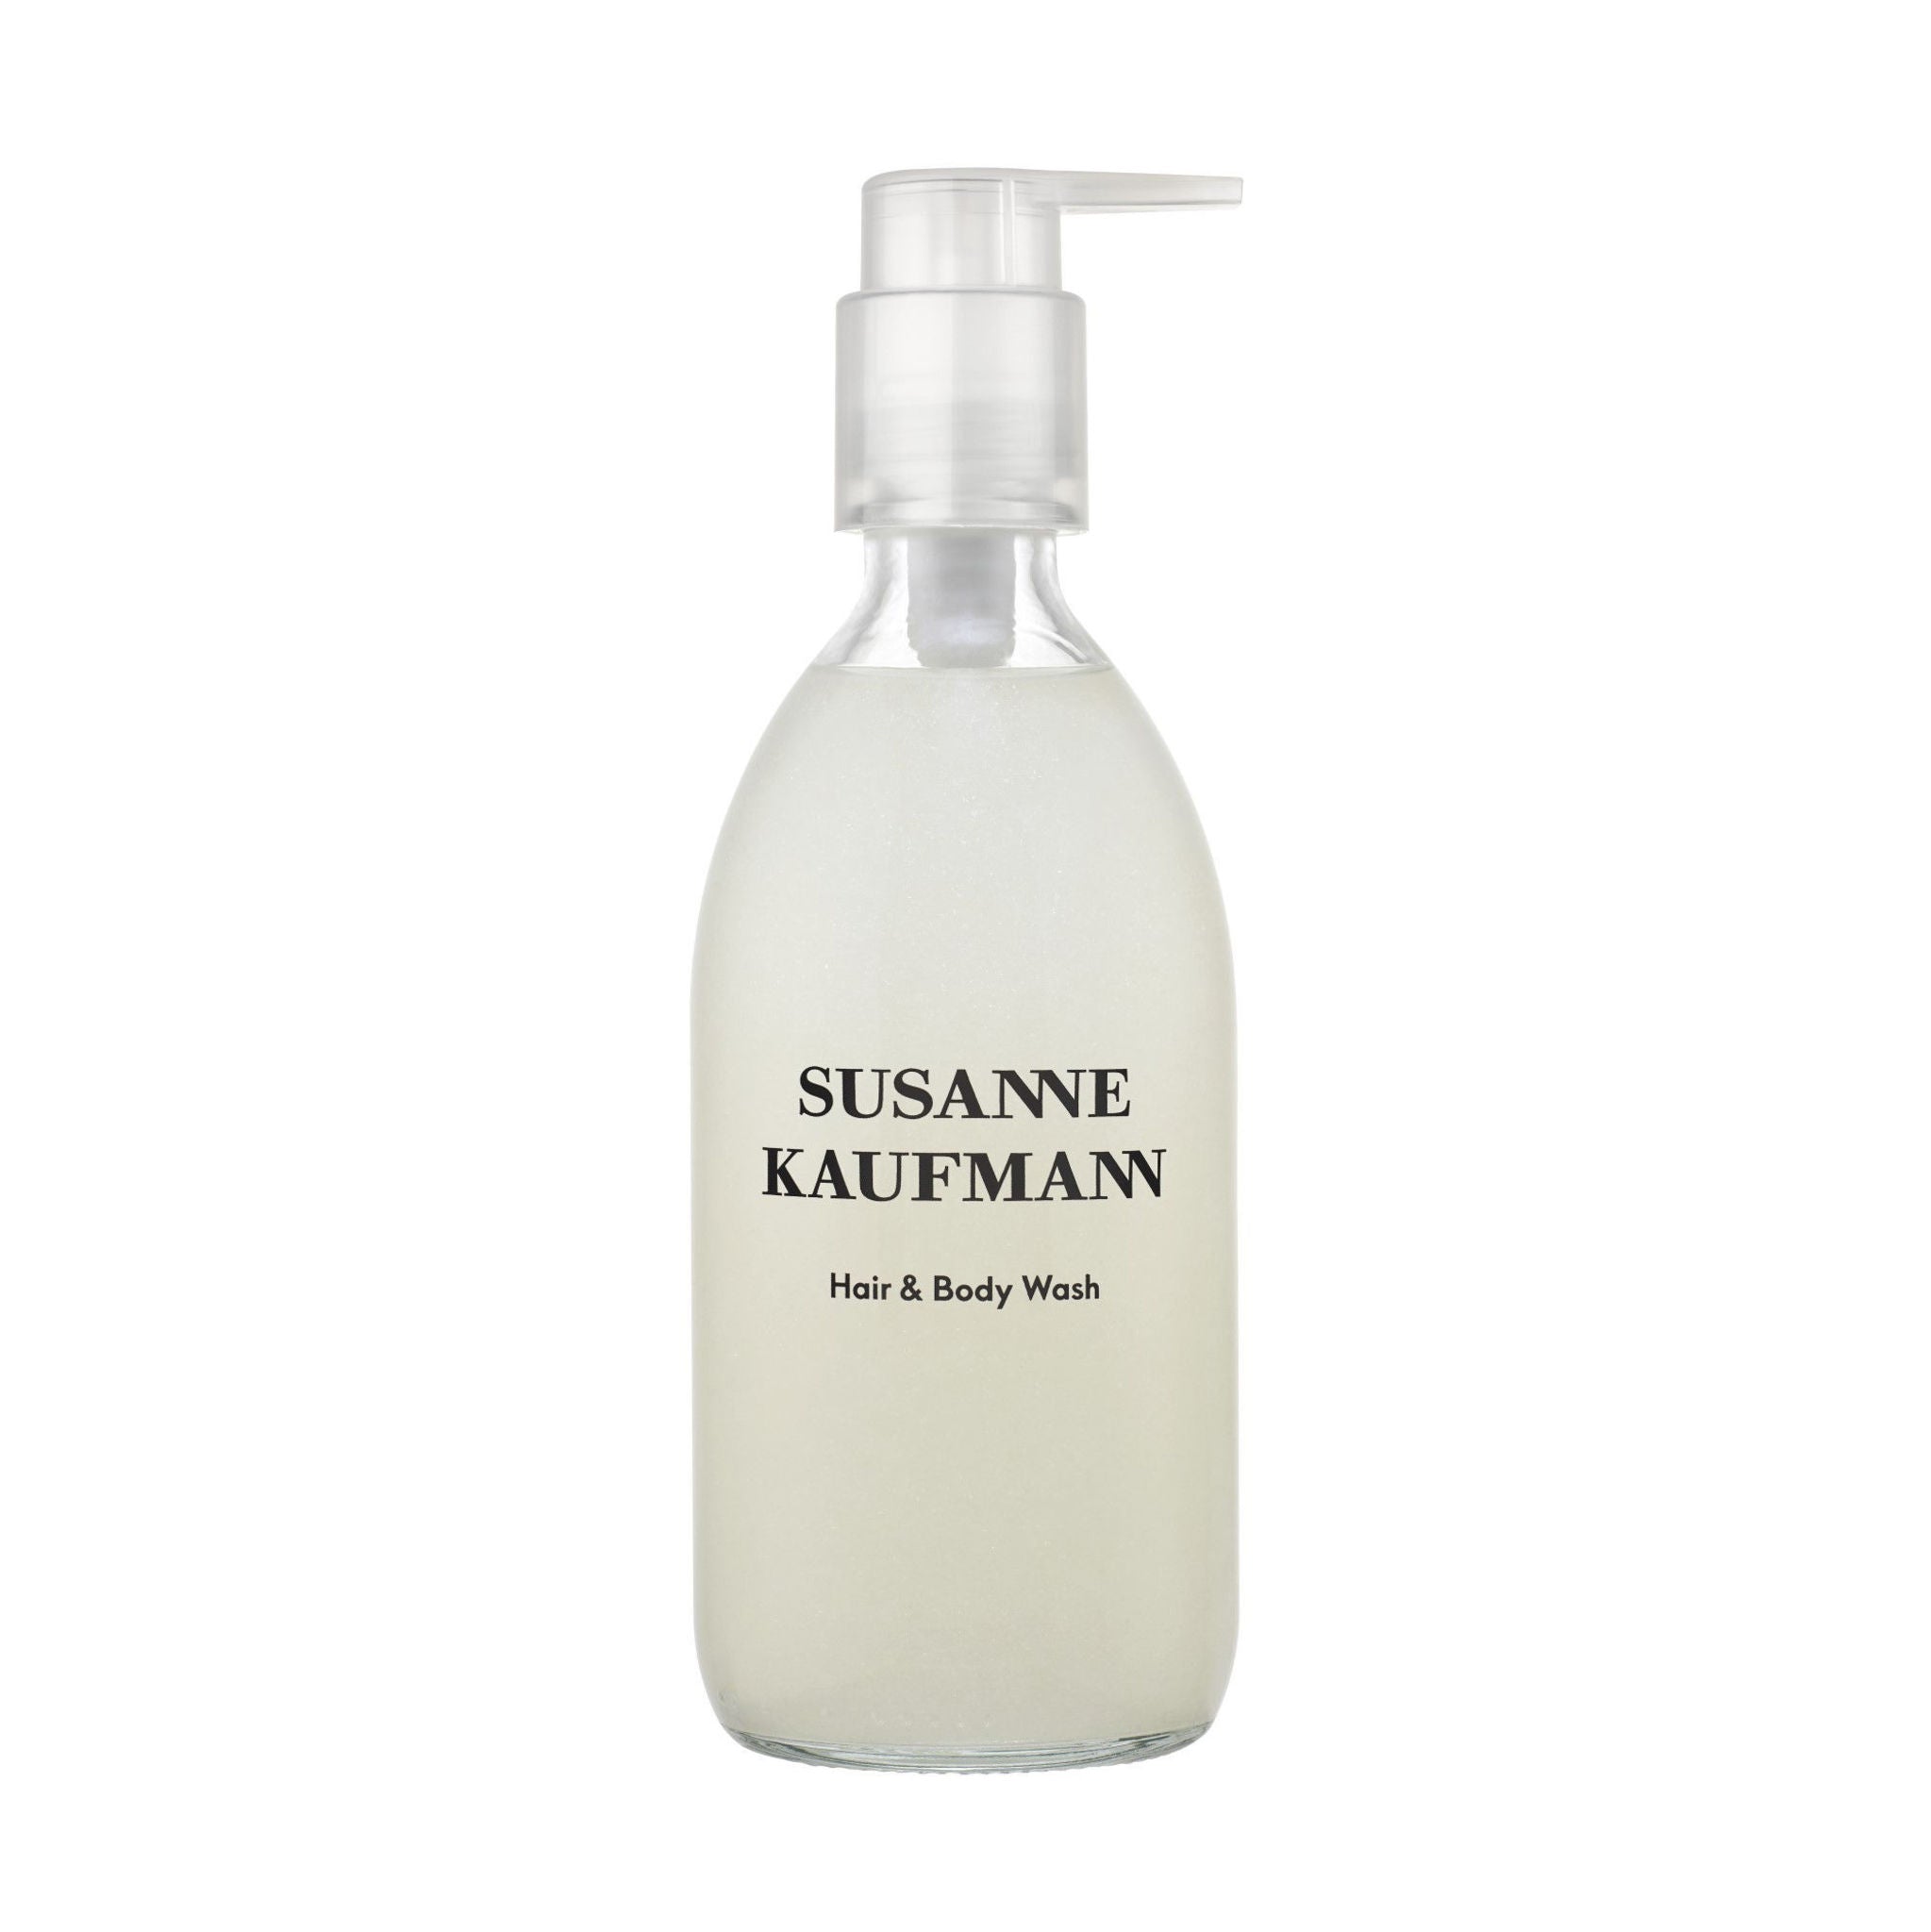 Susanne Kaufmann Hair & Body Wash main image.